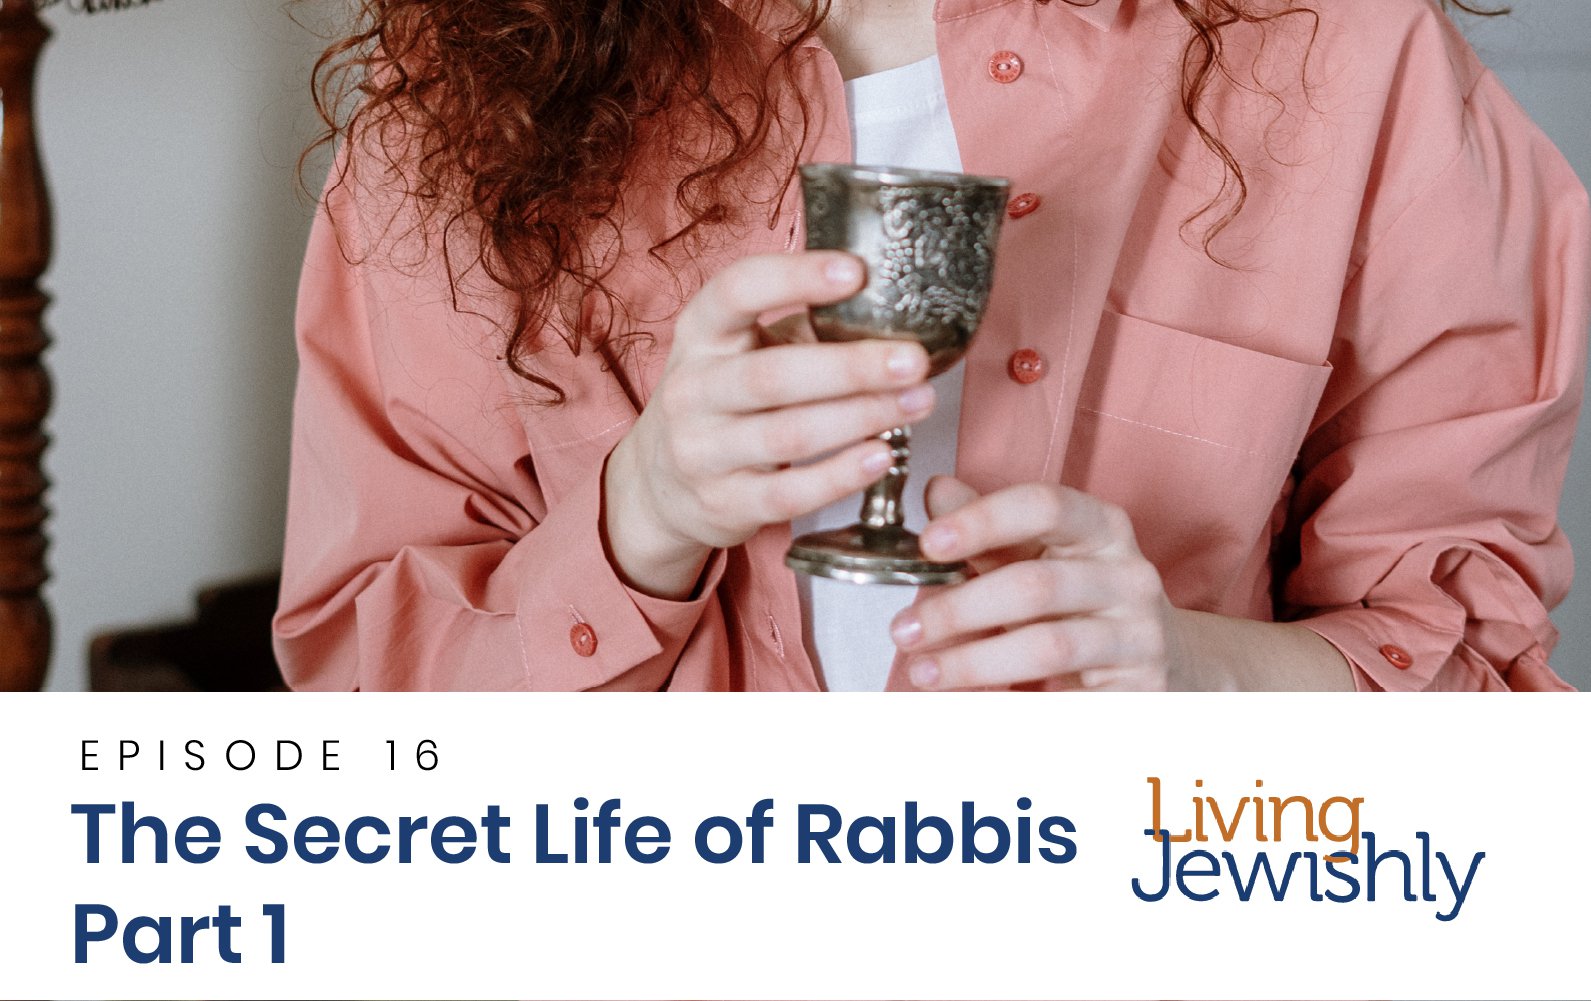 The Secret Life of Rabbis: Part 1